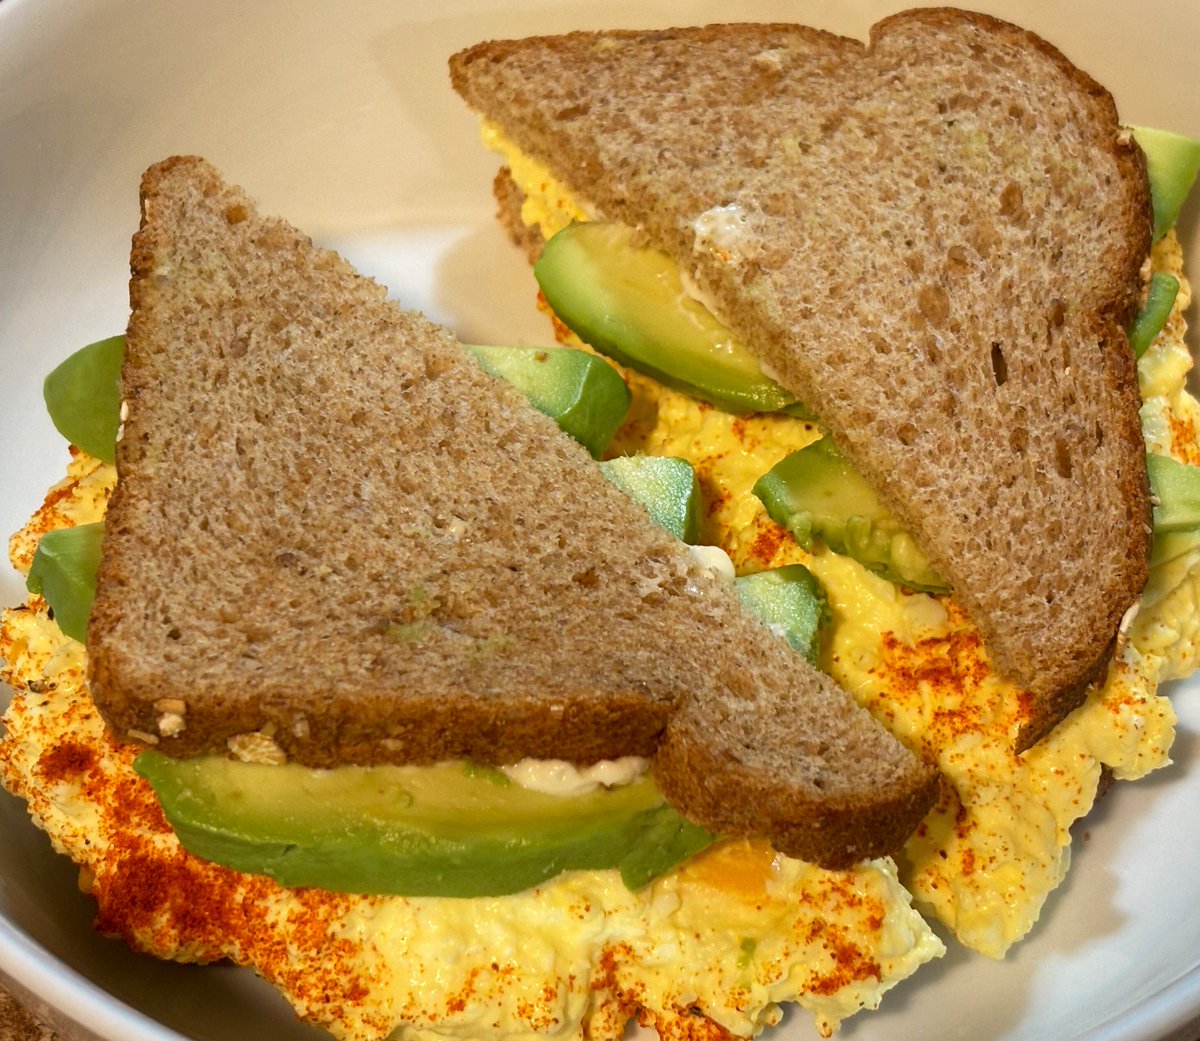 No Blowjob Egg Salad Sandwich for @The1_RadioShow tonight. IYKYK. 🙌🏻😂 #ChefMama #APE #FoodPorn